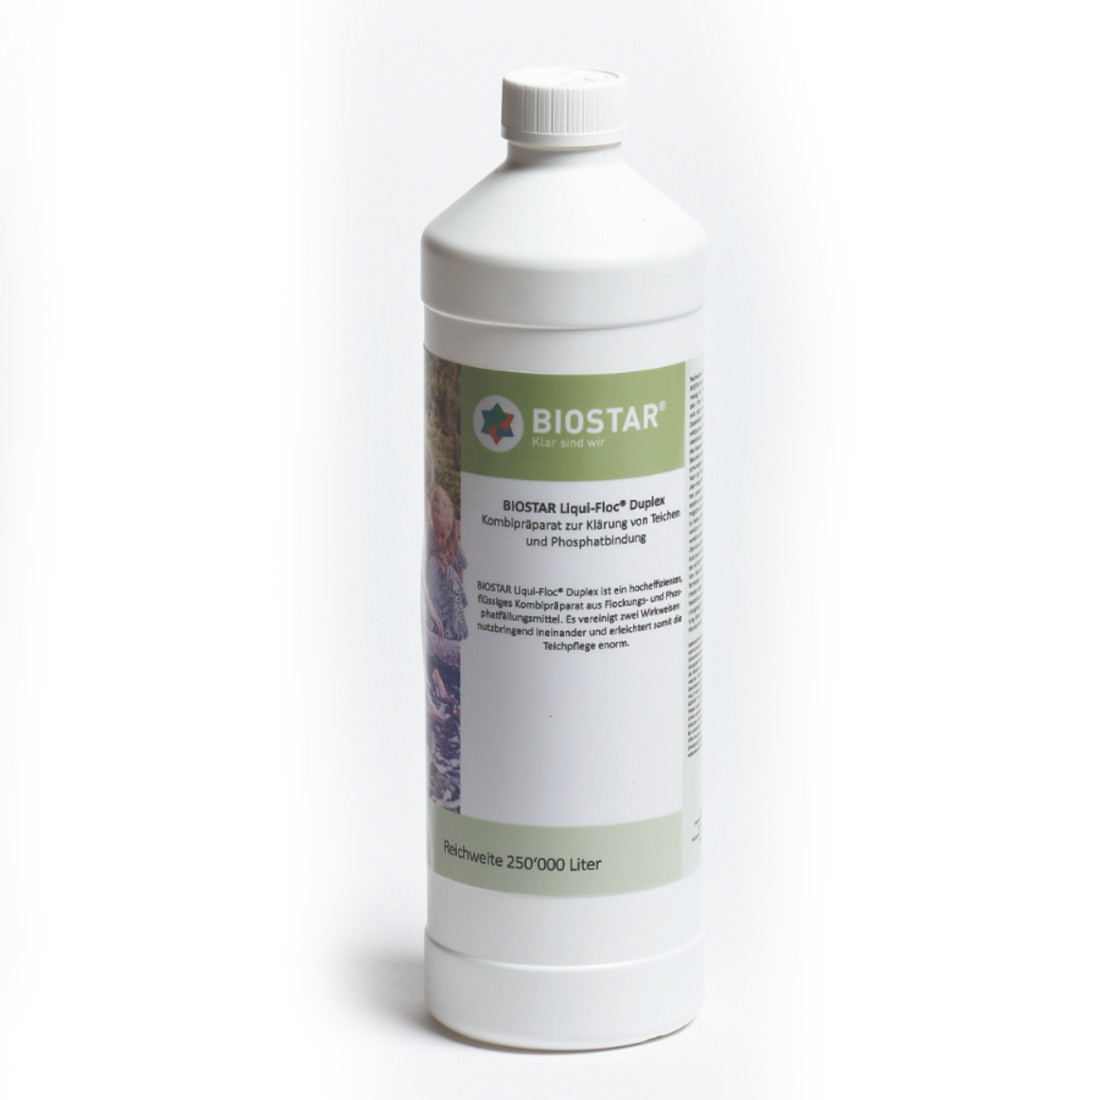 Biostar Liqui-Floc®Duplex 1 Liter